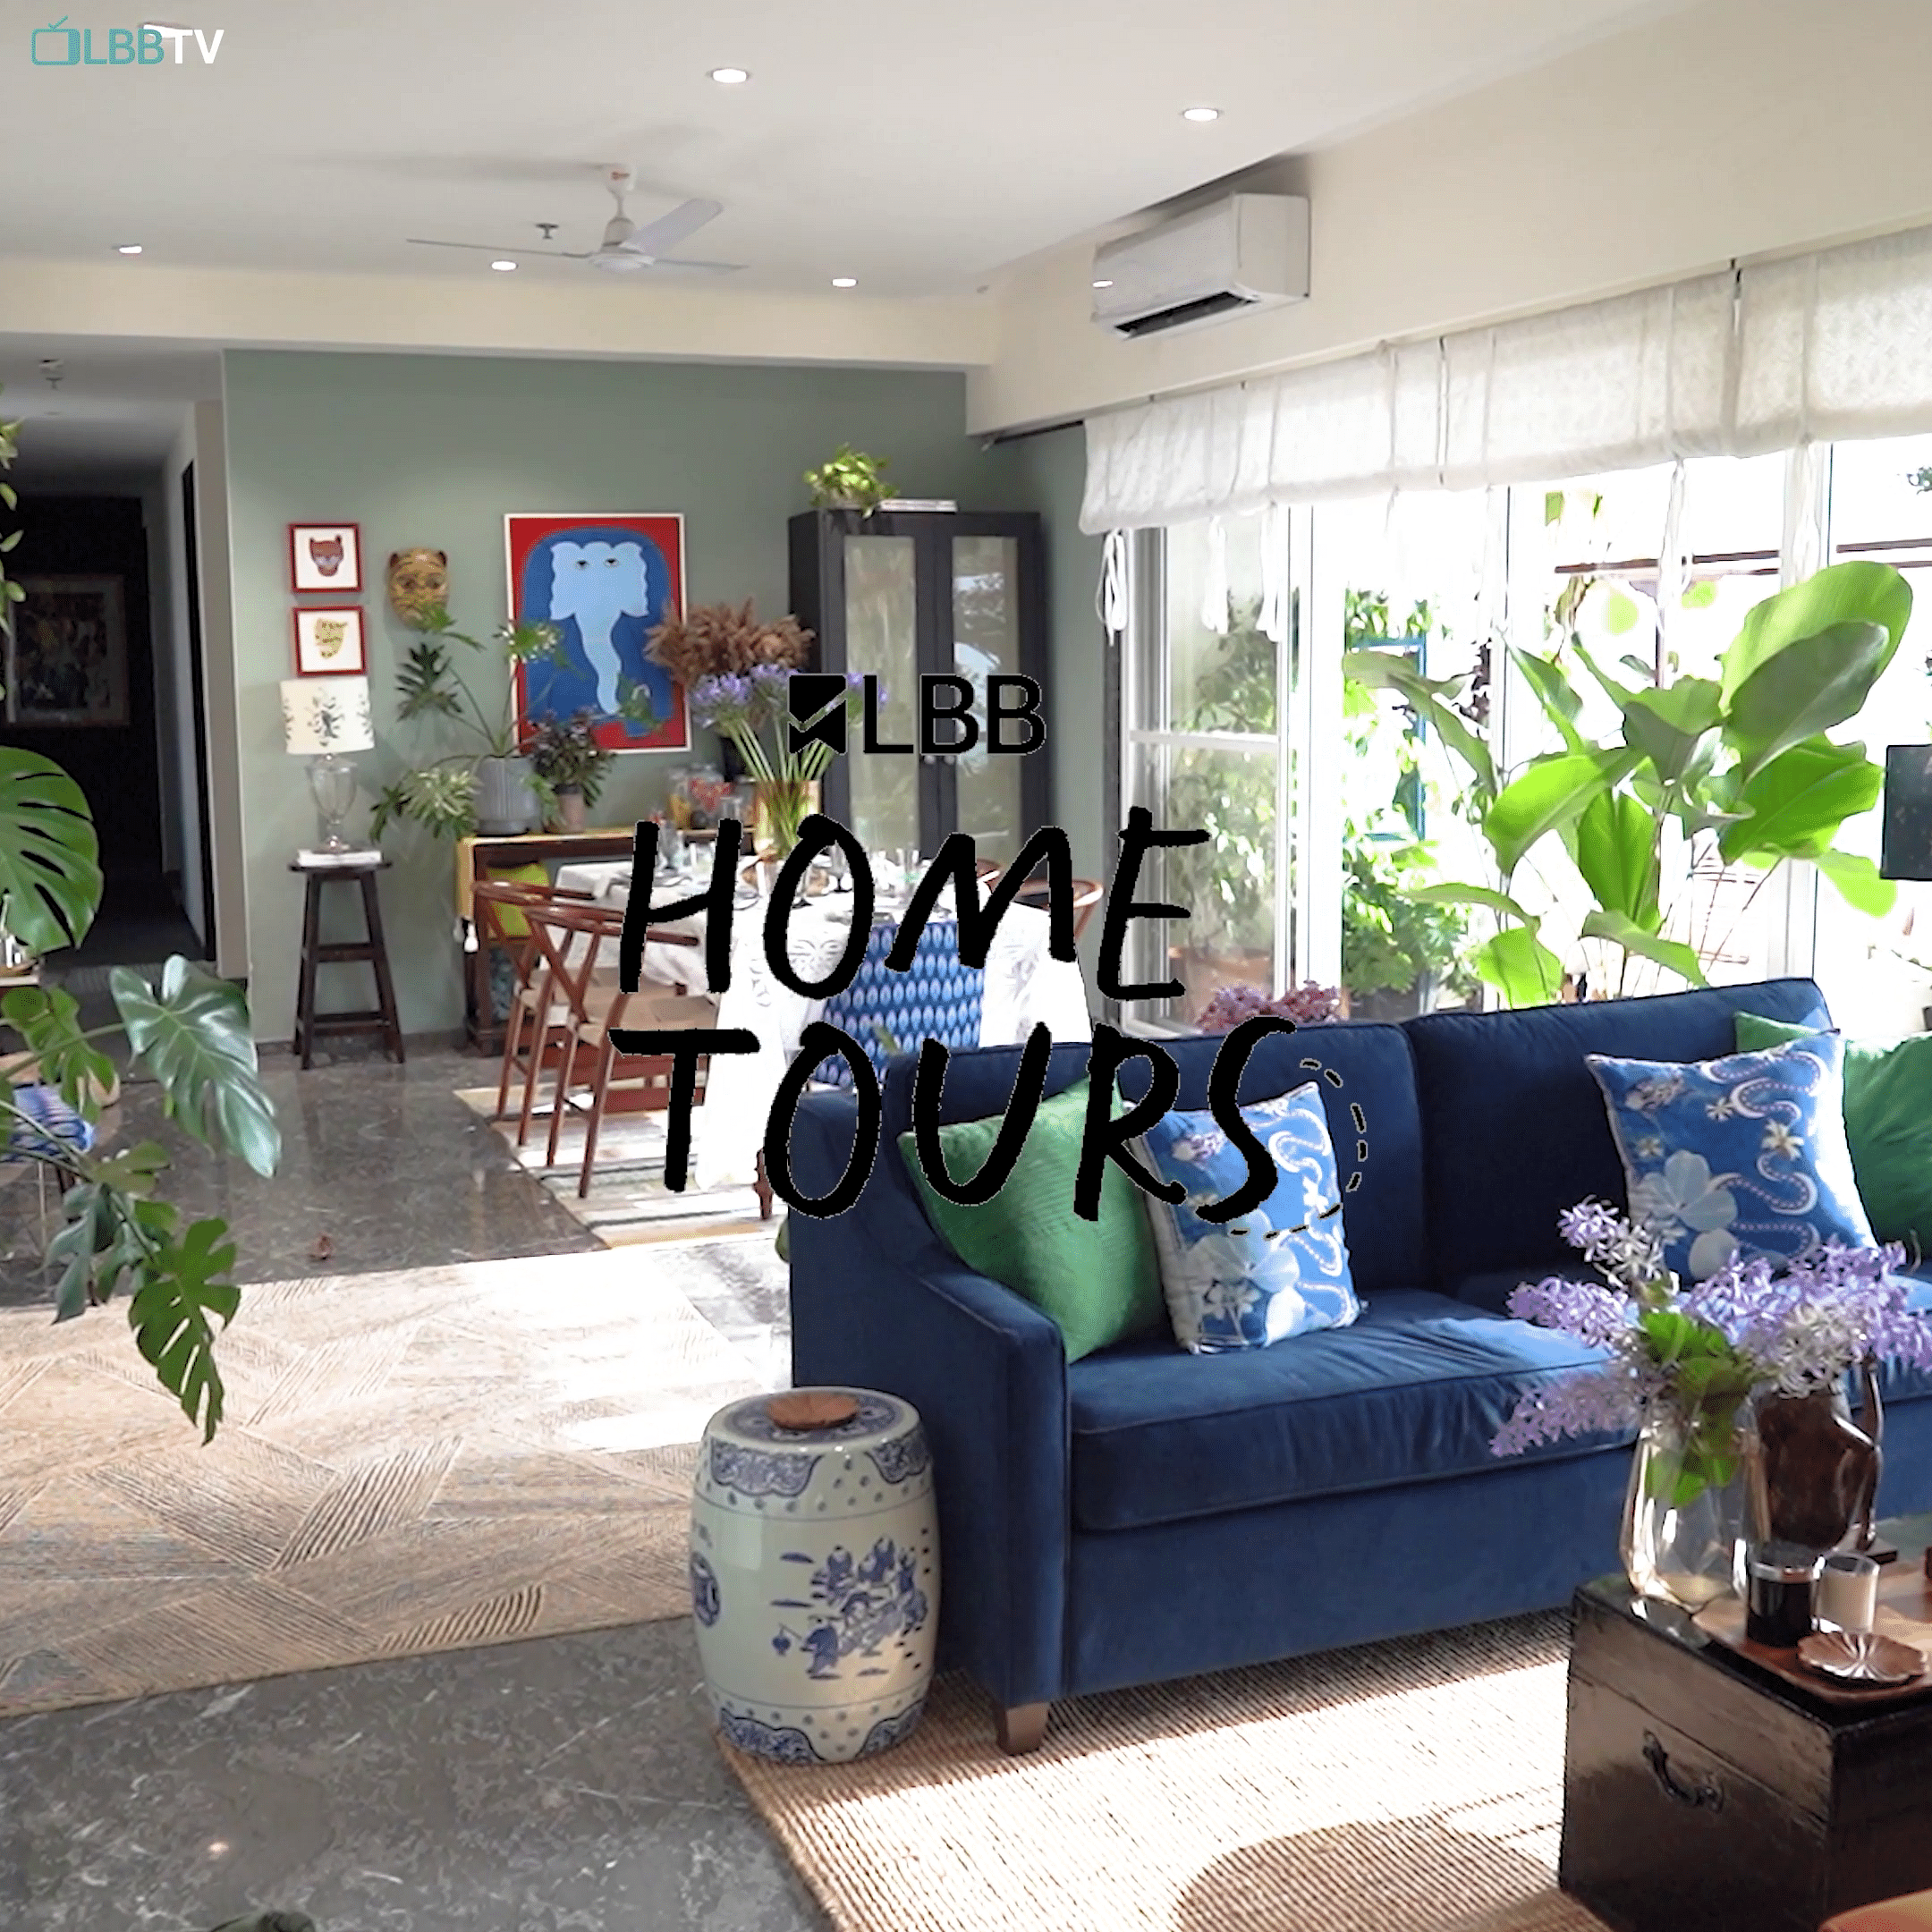 Plant,Property,Furniture,Couch,Building,Houseplant,Table,Azure,Flowerpot,Interior design